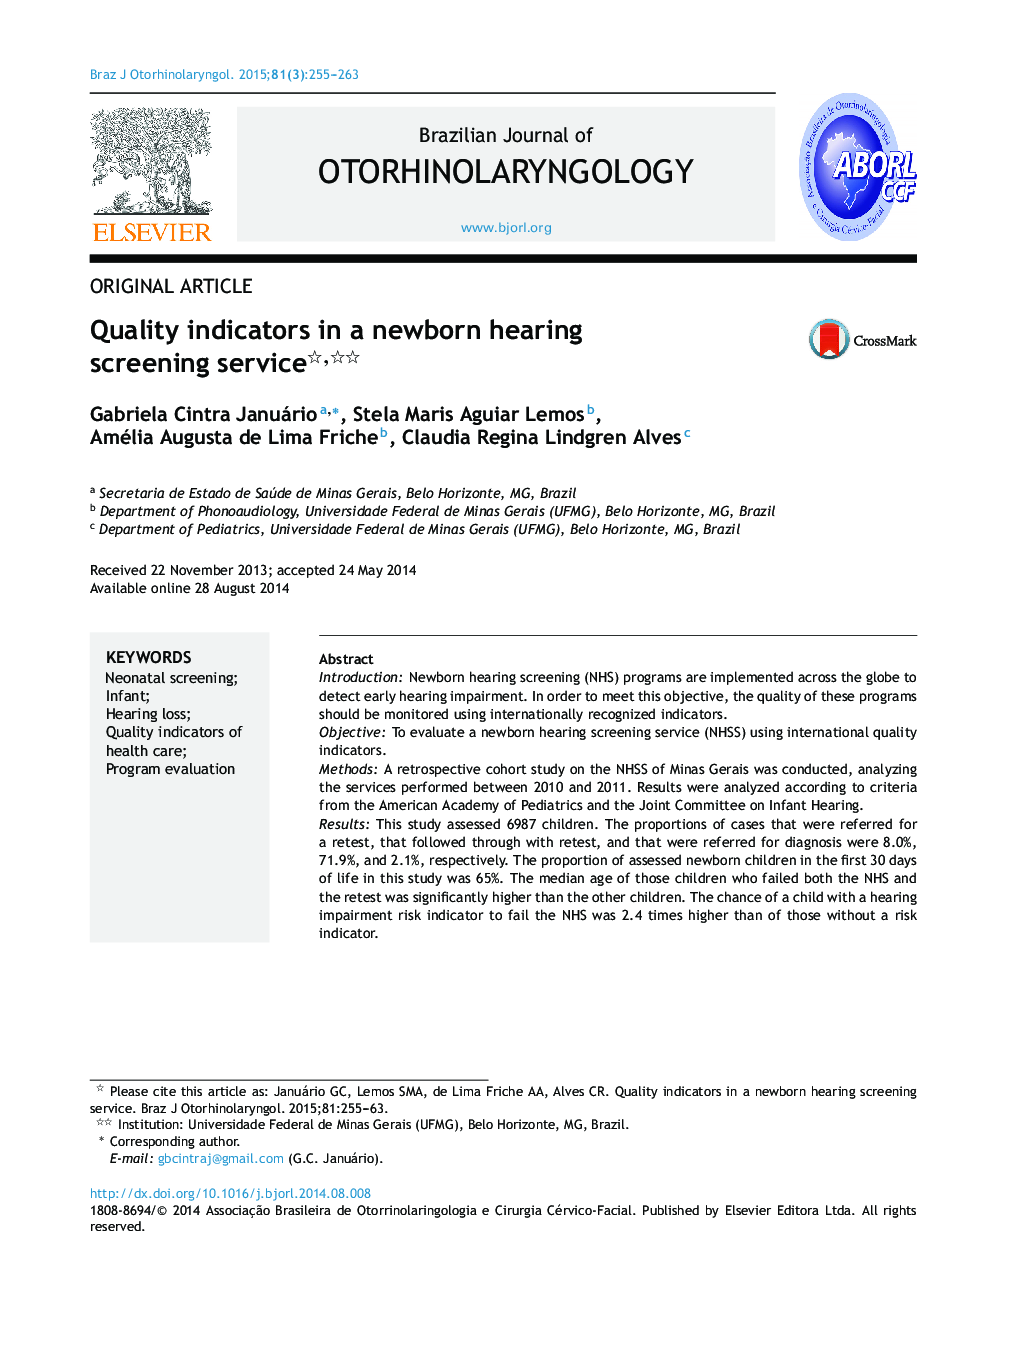 Quality indicators in a newborn hearing screening service 